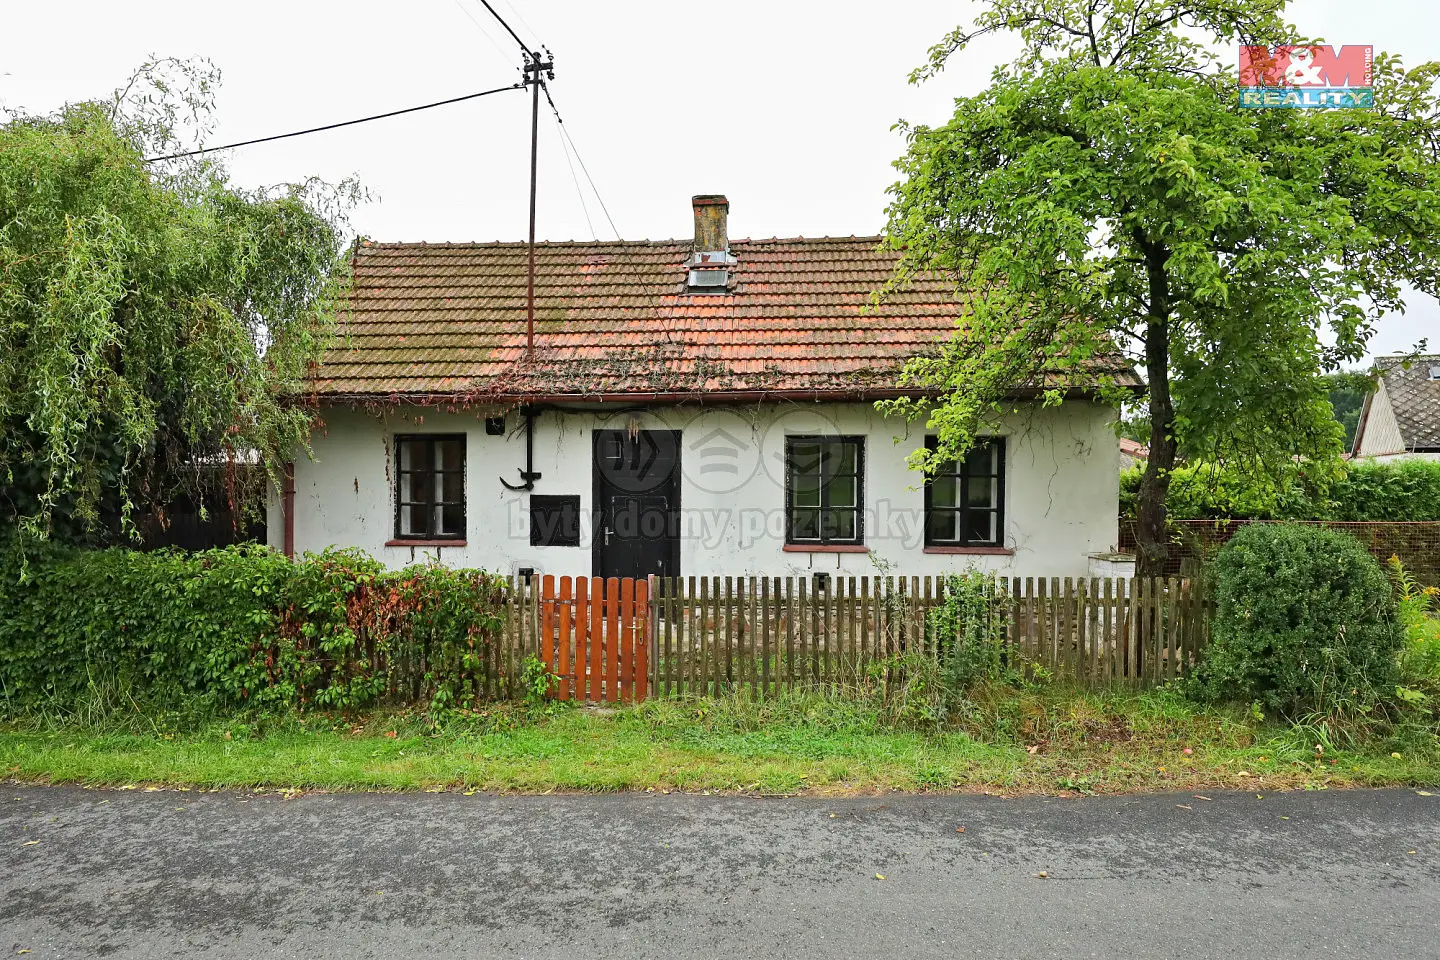 Petrovice I - Michalovice, okres Kutná Hora